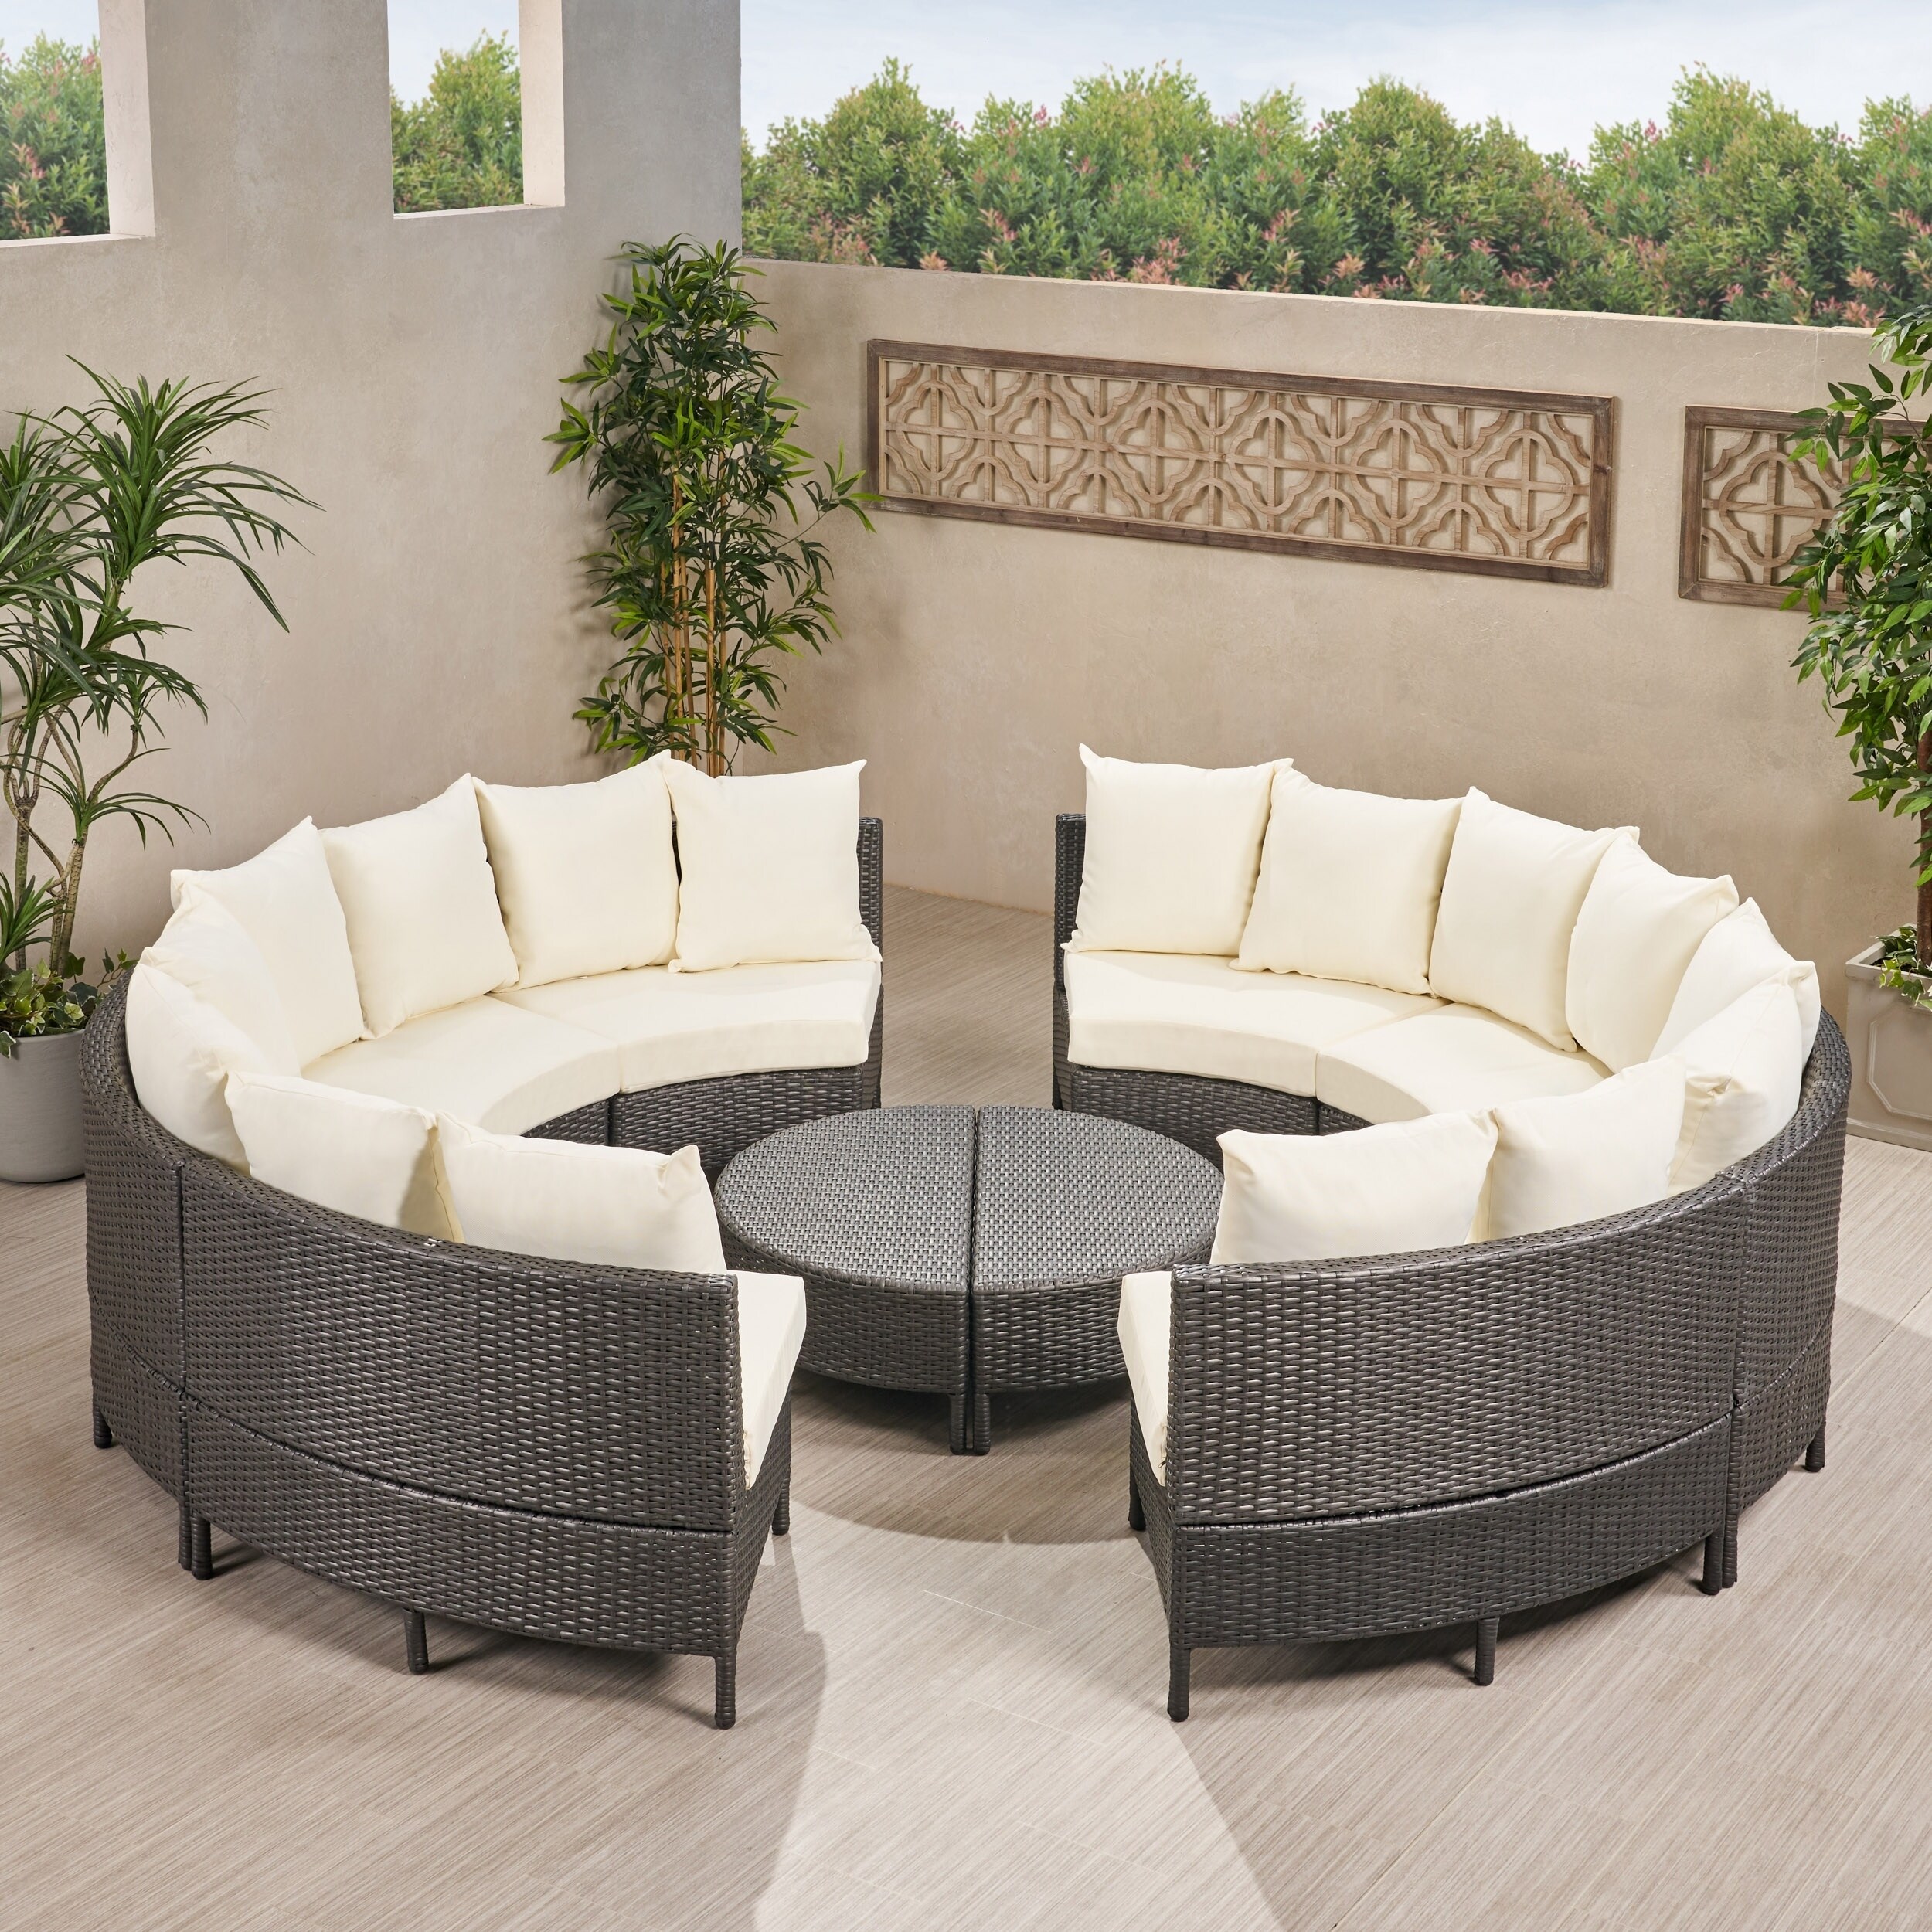 Newton Outdoor  Round Wicker Sectional  Sofa  Set by eBay